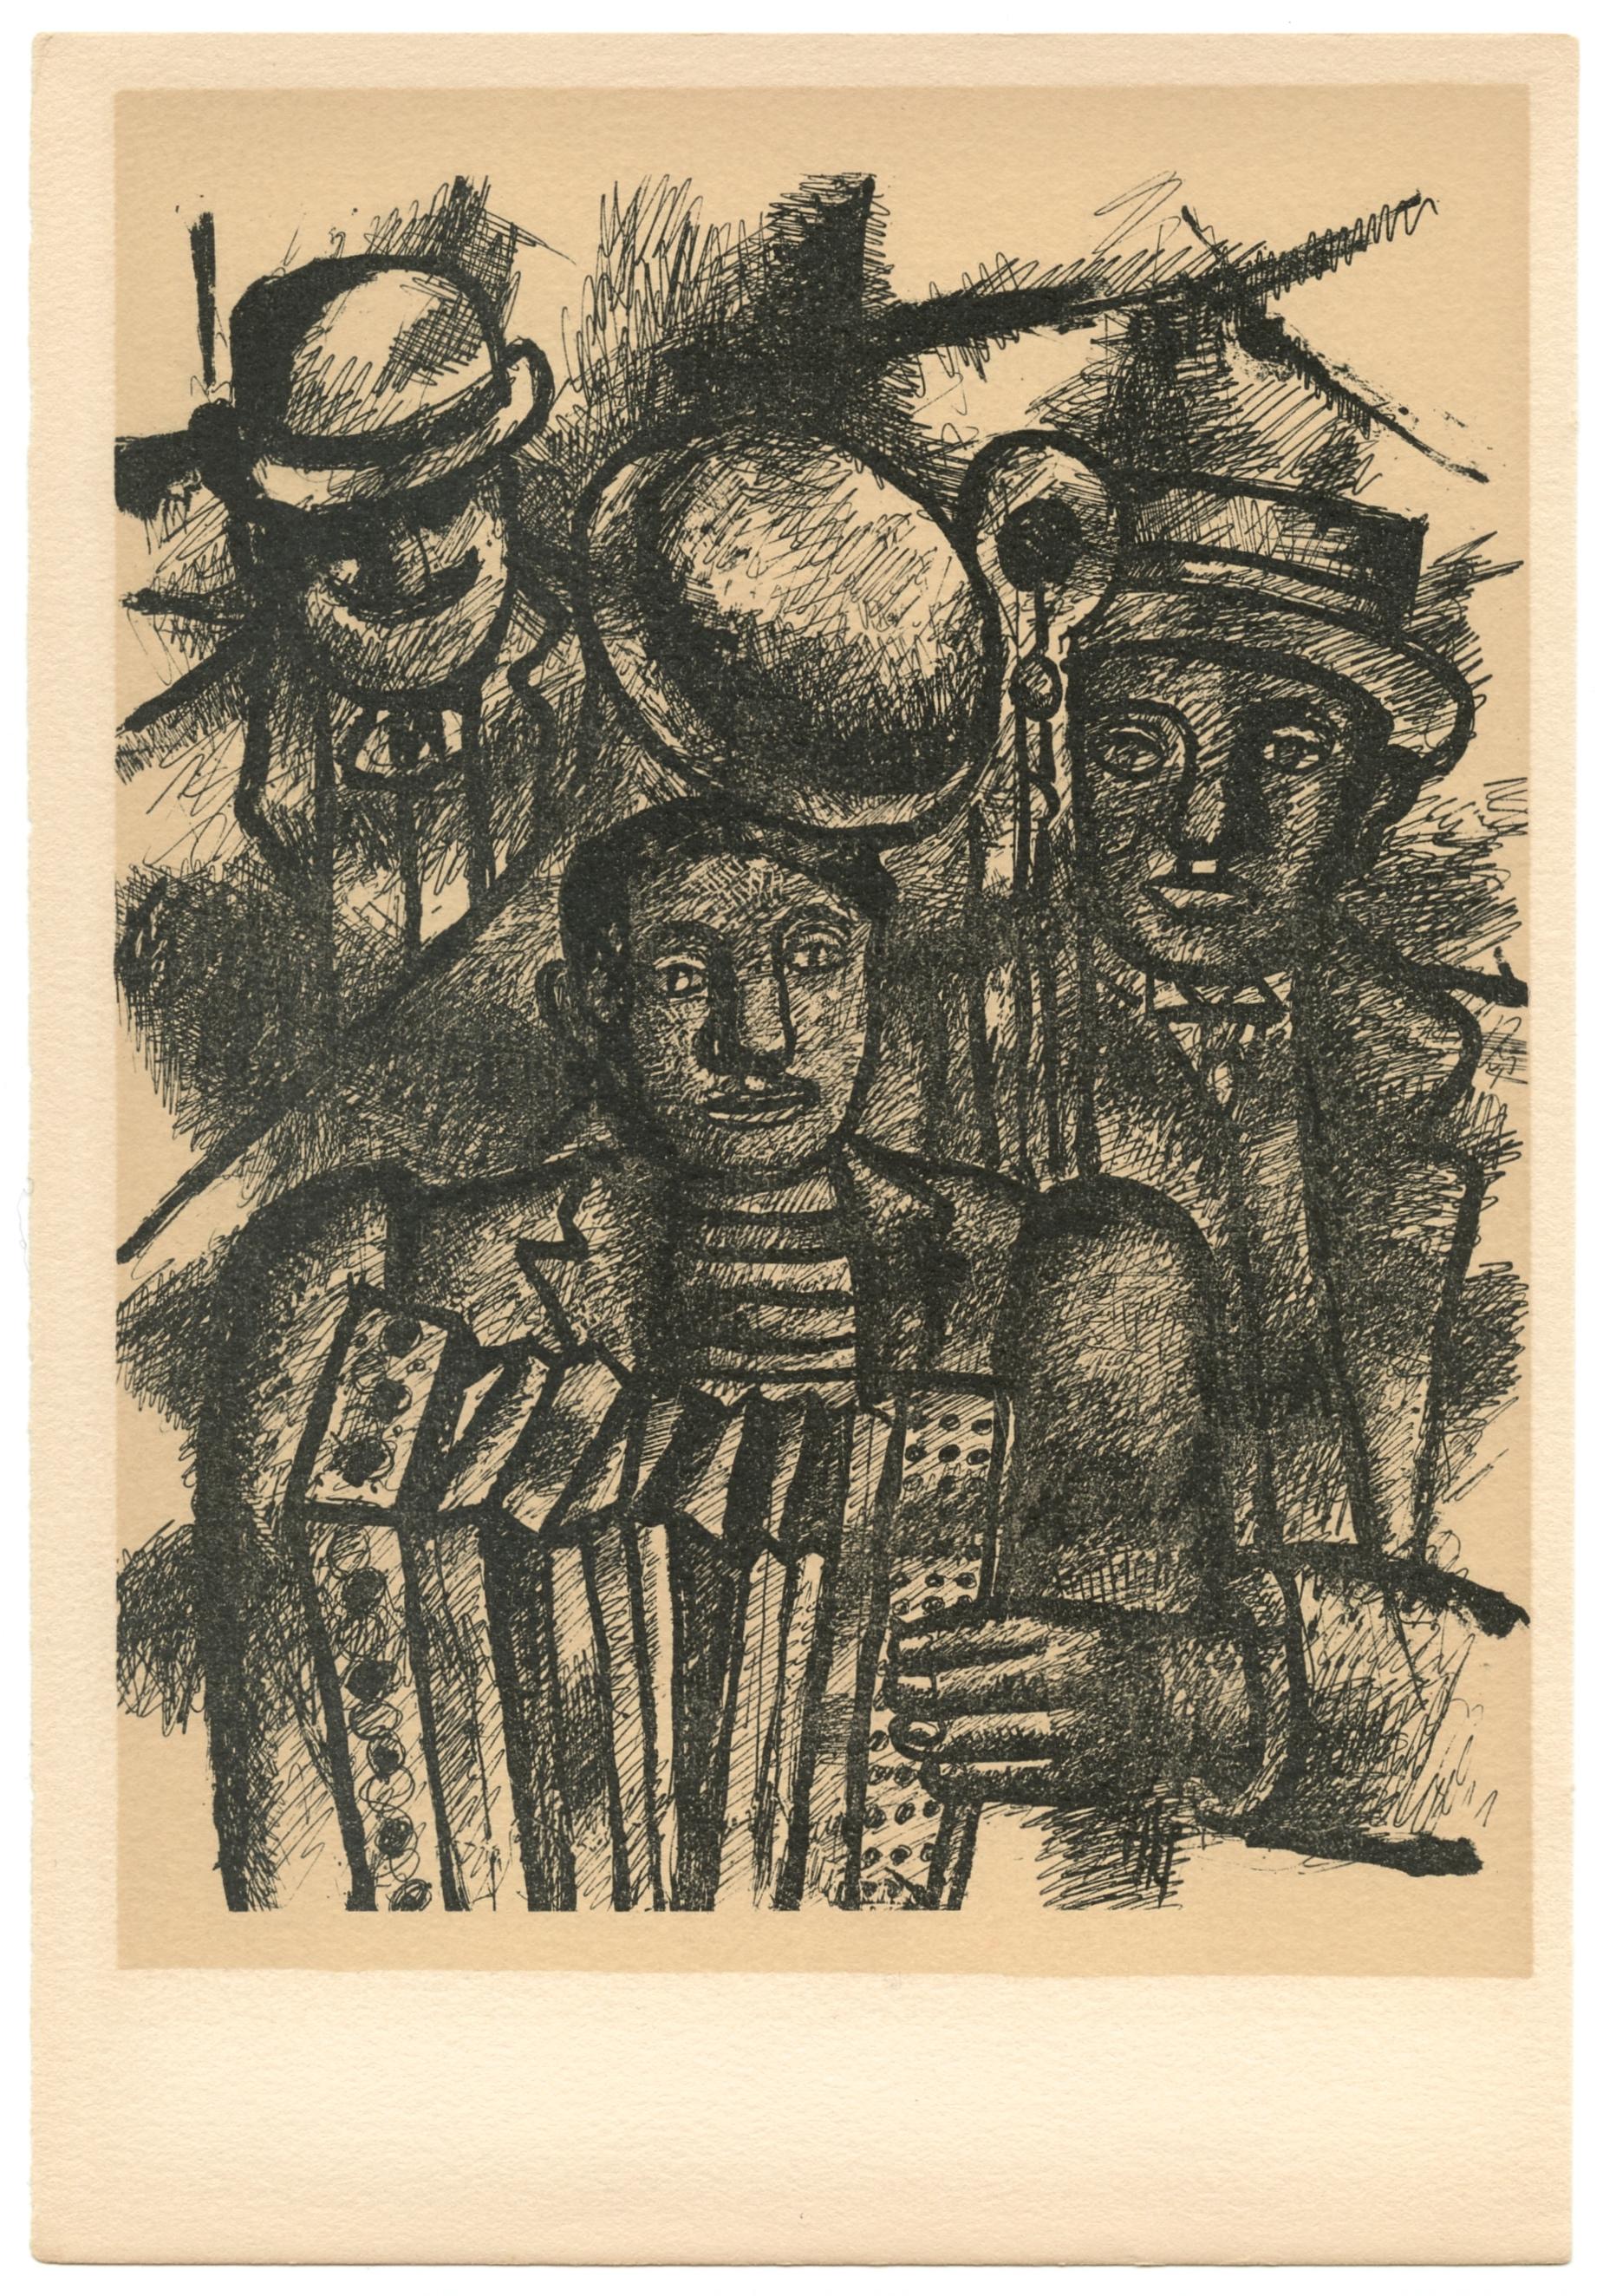 "Les musiciens" lithograph - Print by (after) Fernand Léger